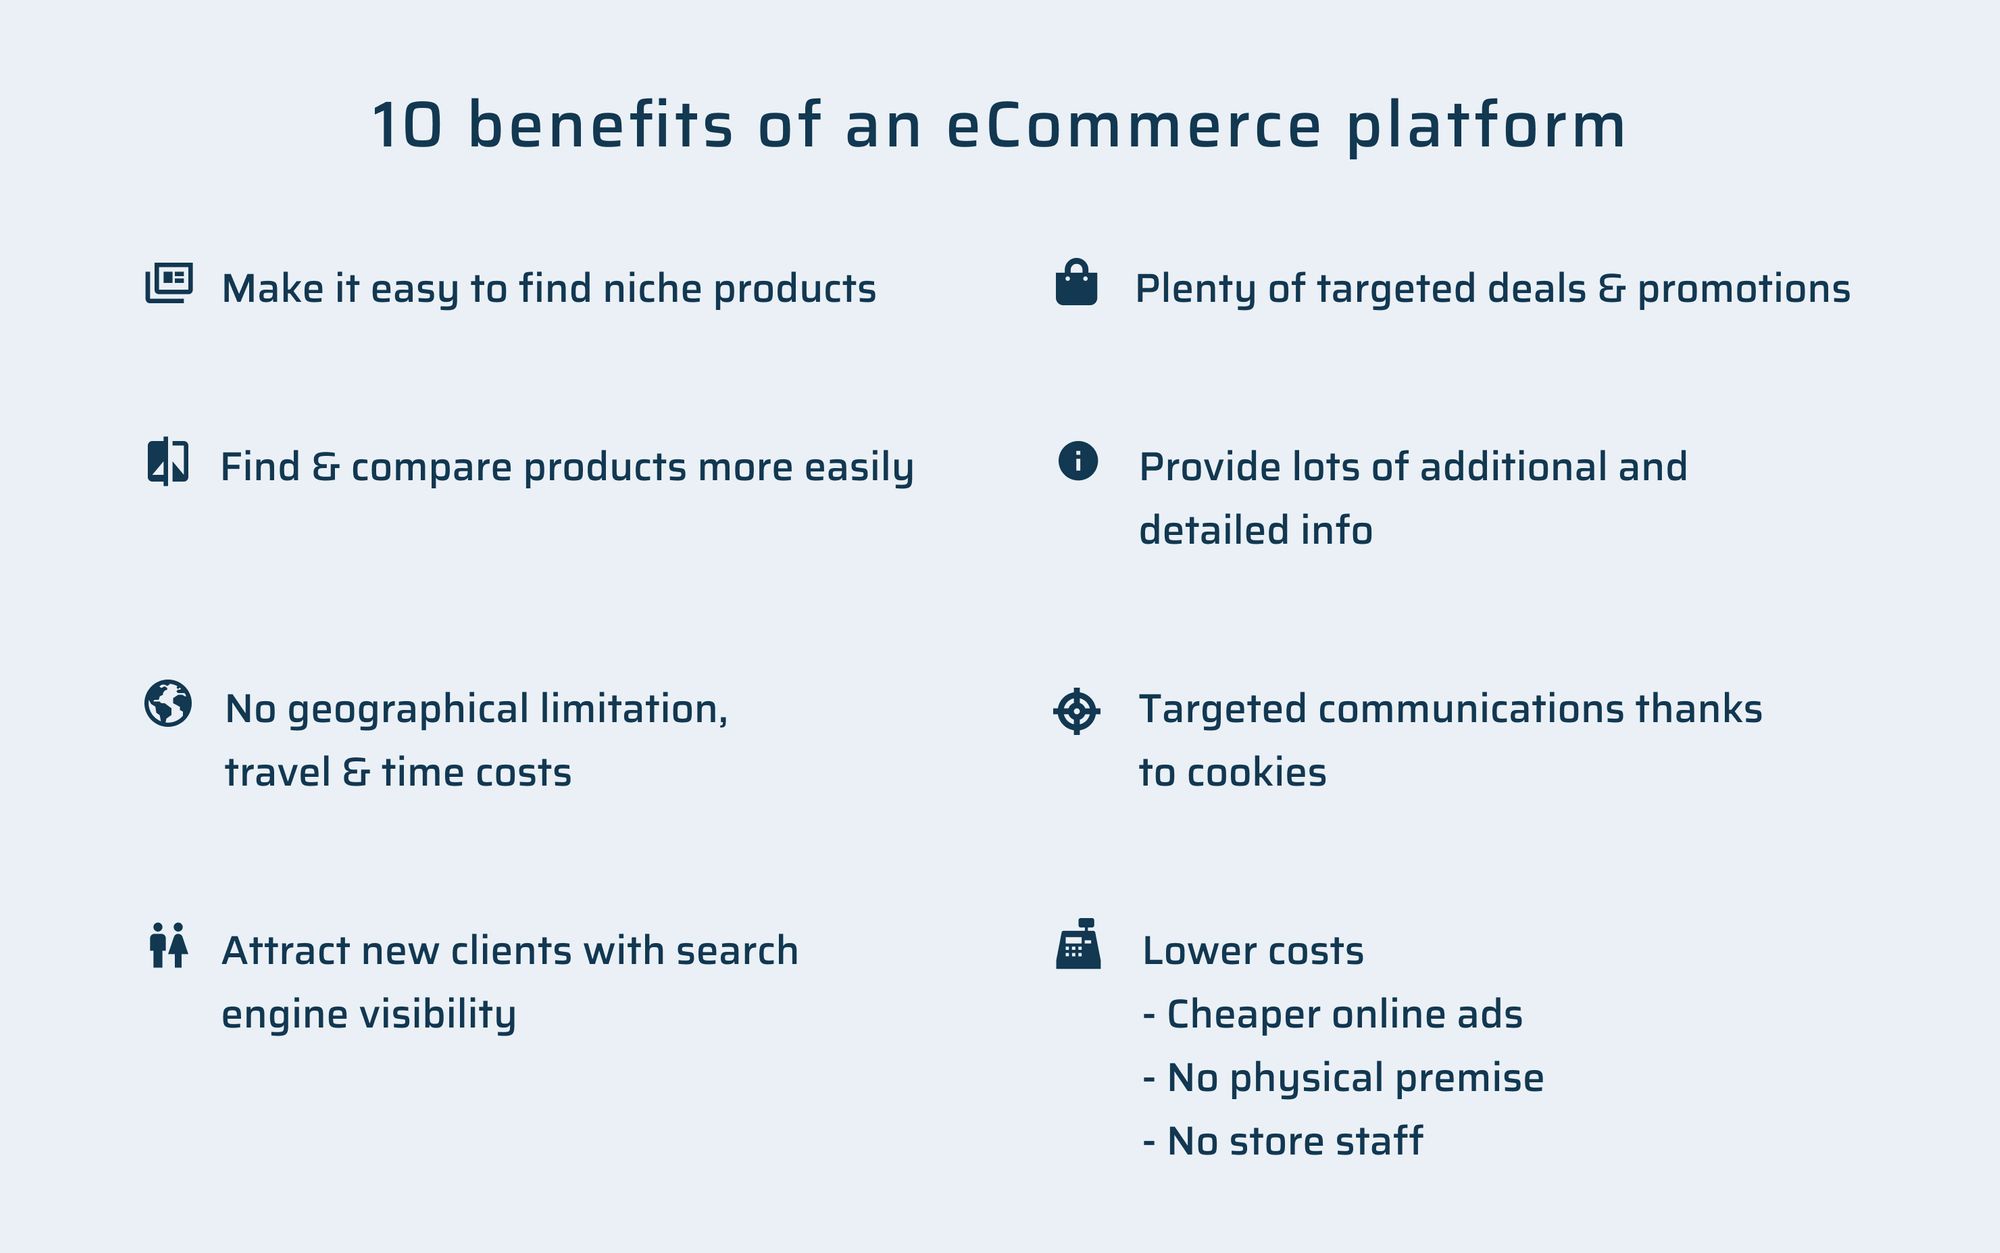 Benefits of eCommerce platform